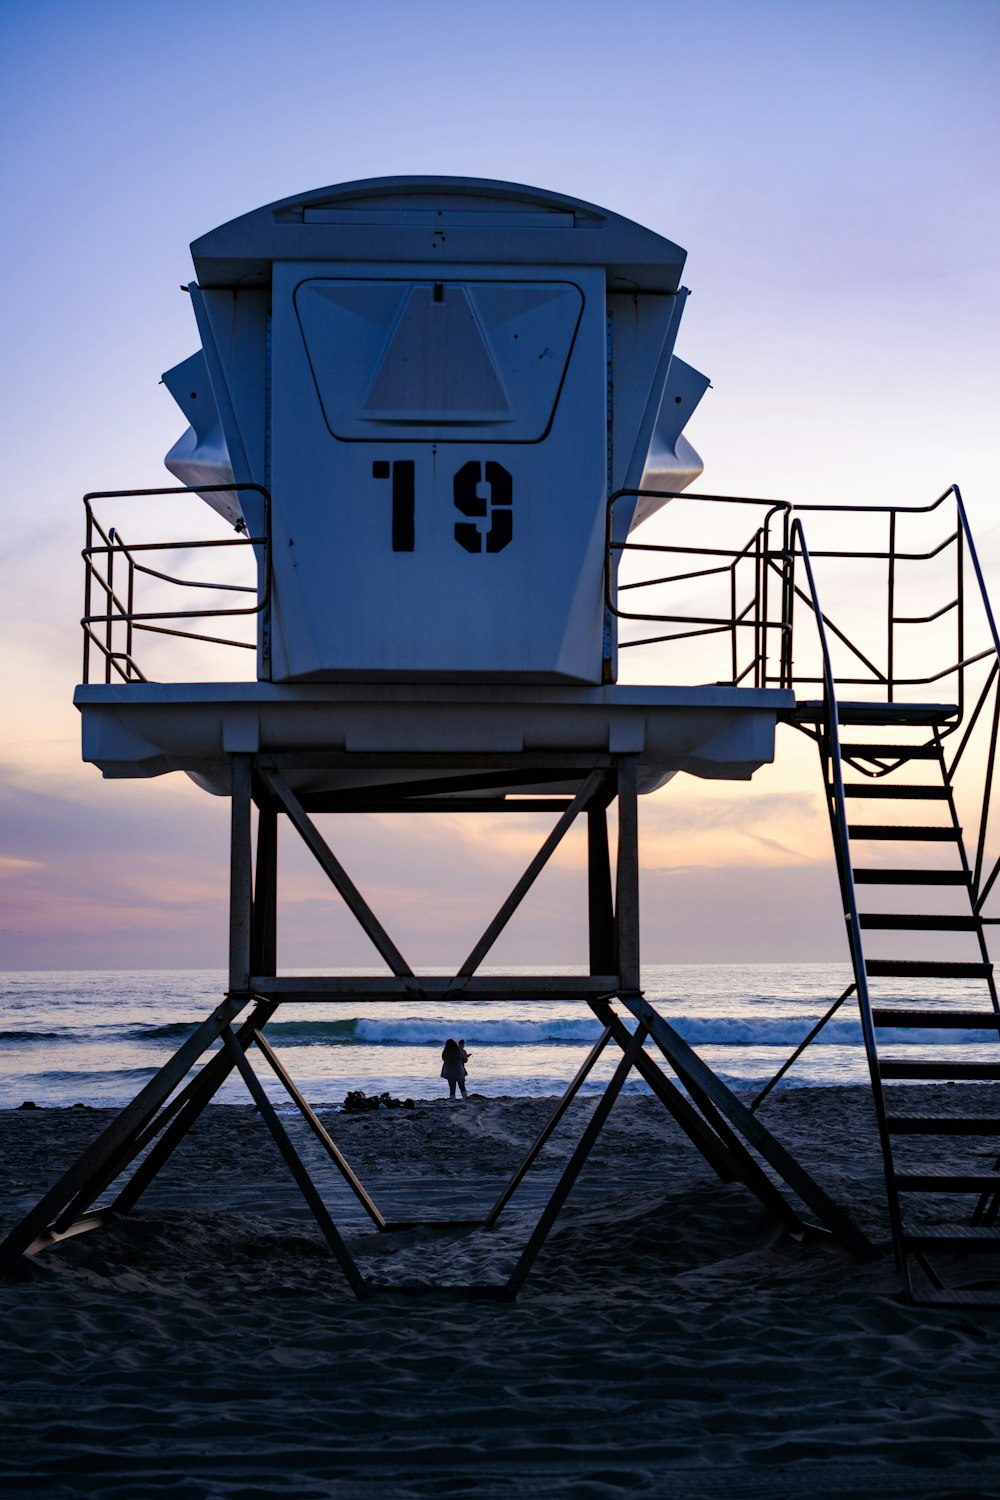 a lifeguard tower on a beach